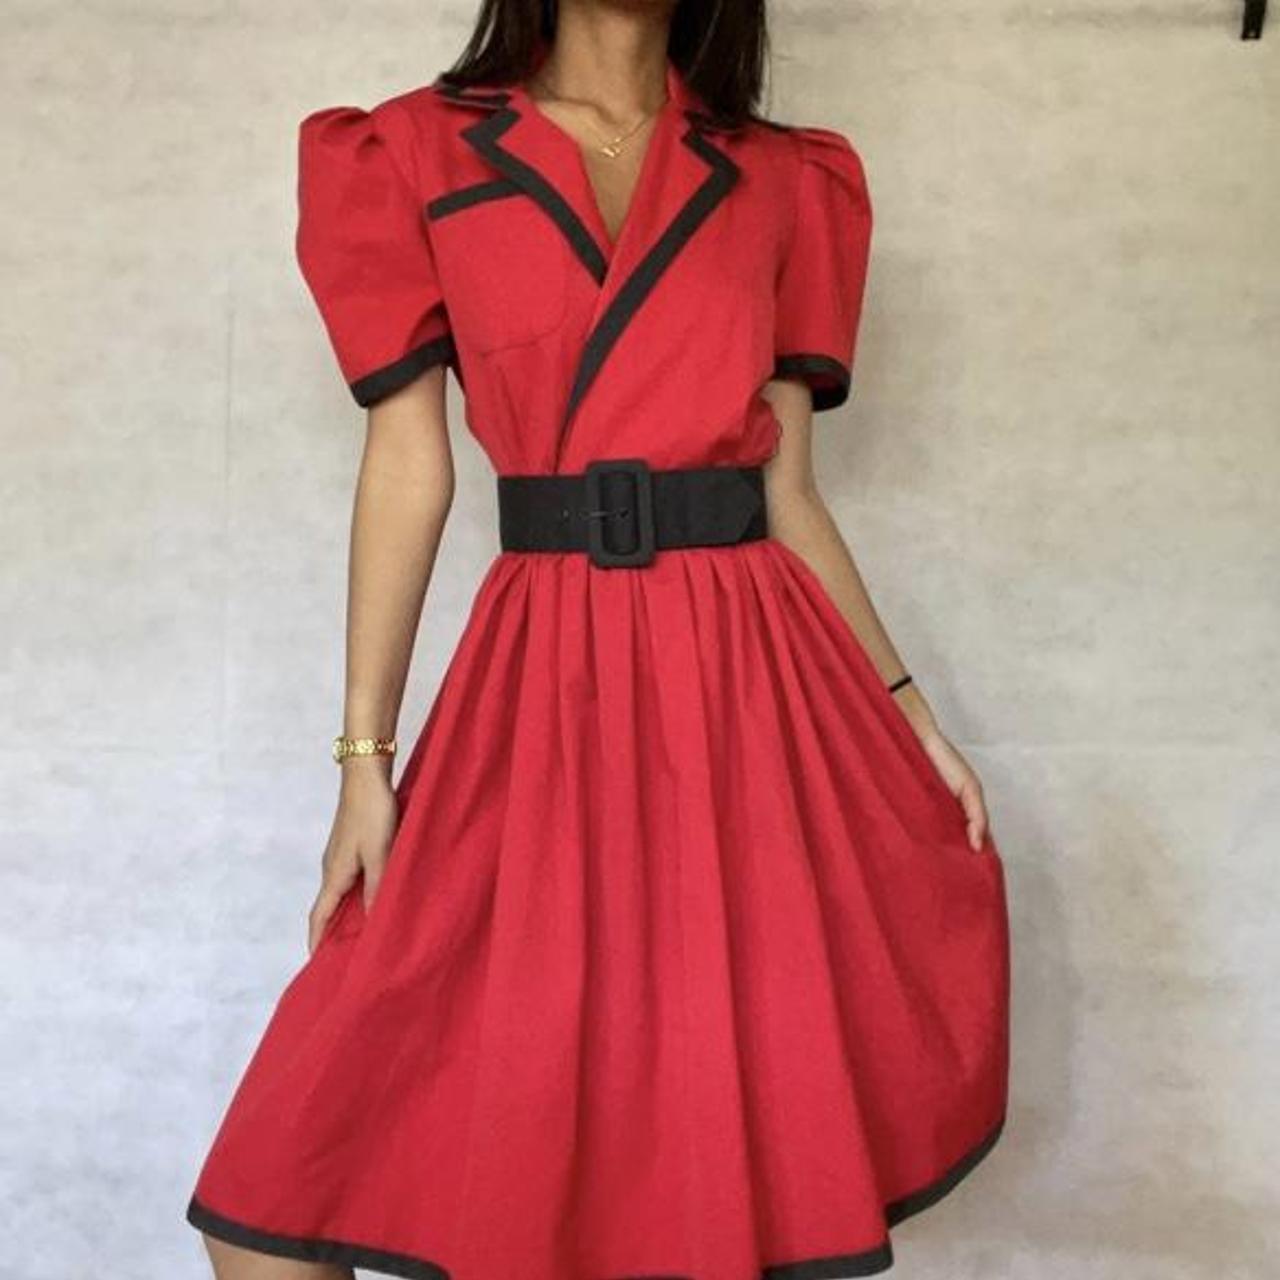 Women's Red and Black Dress | Depop